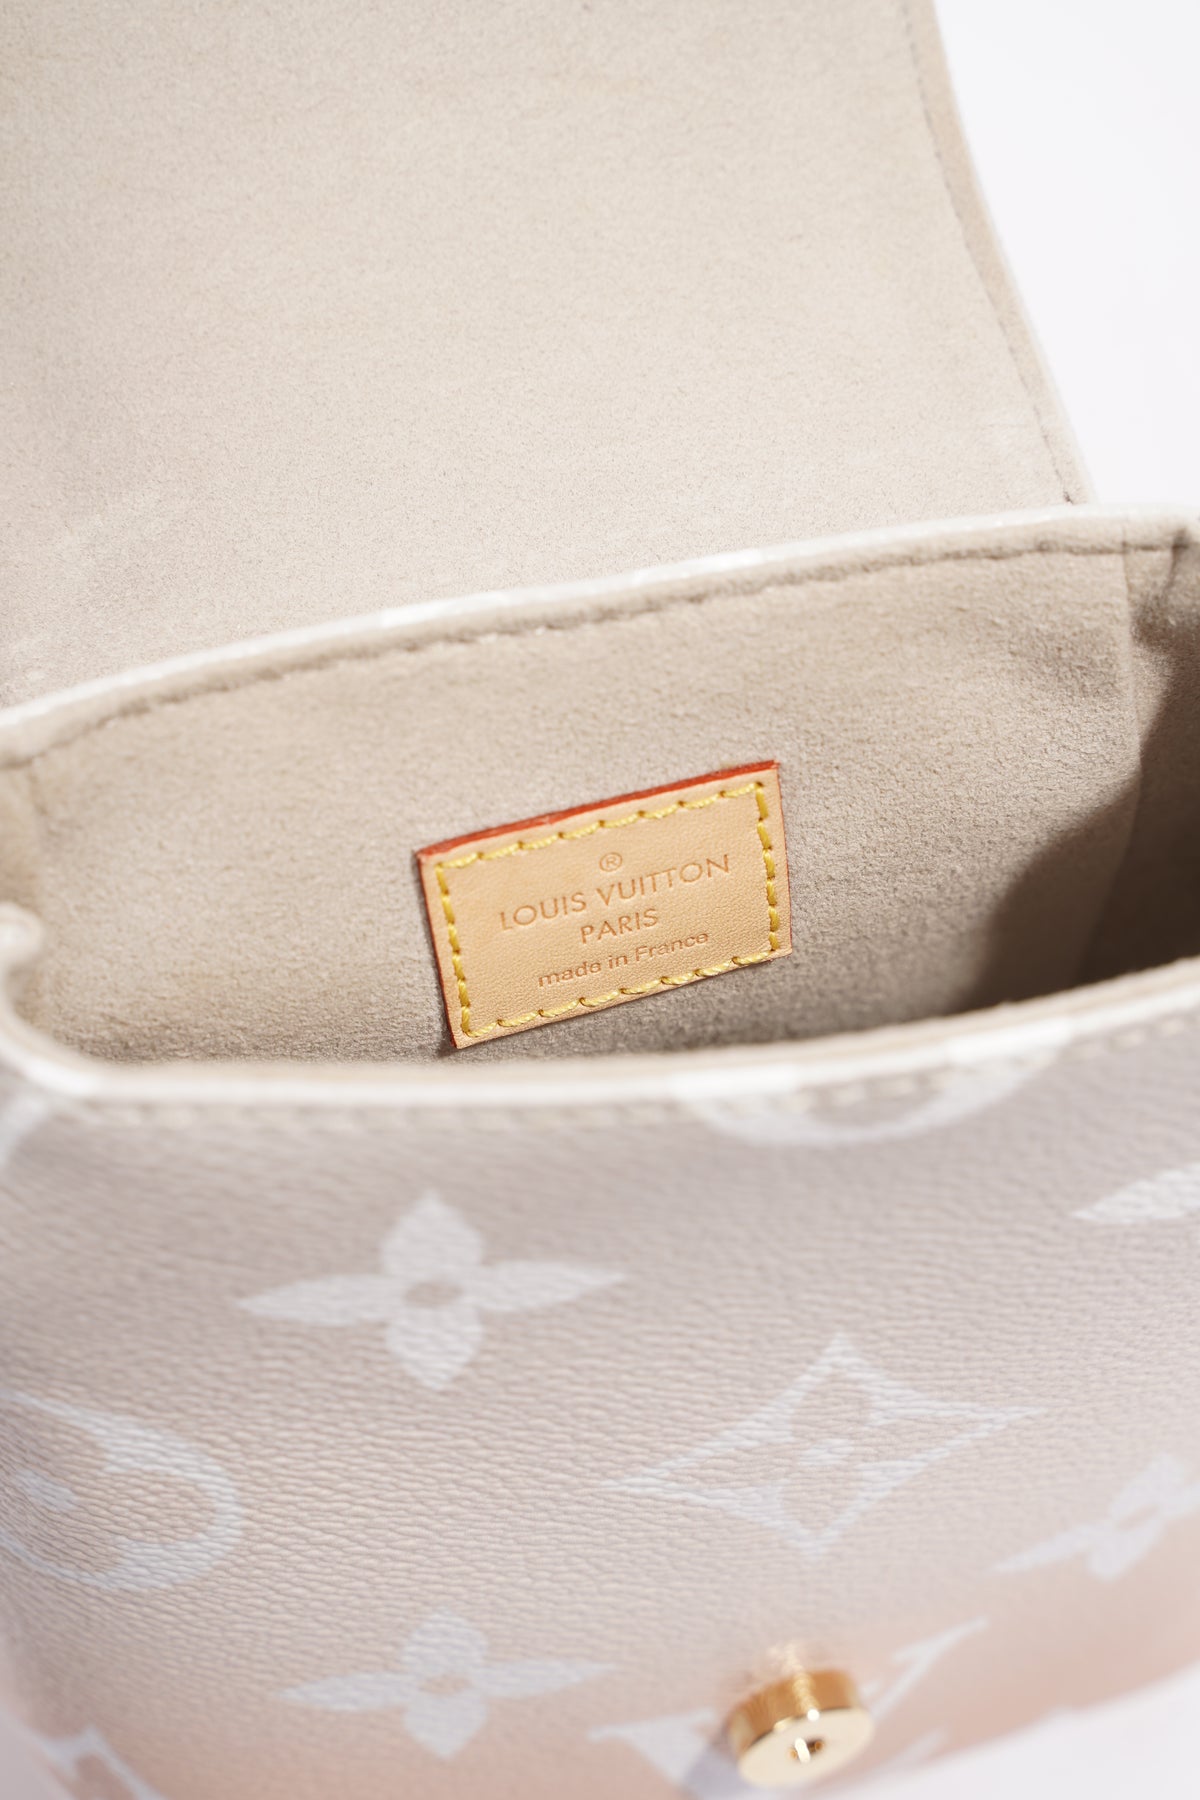 Tiny Backpack By The Pool – Keeks Designer Handbags